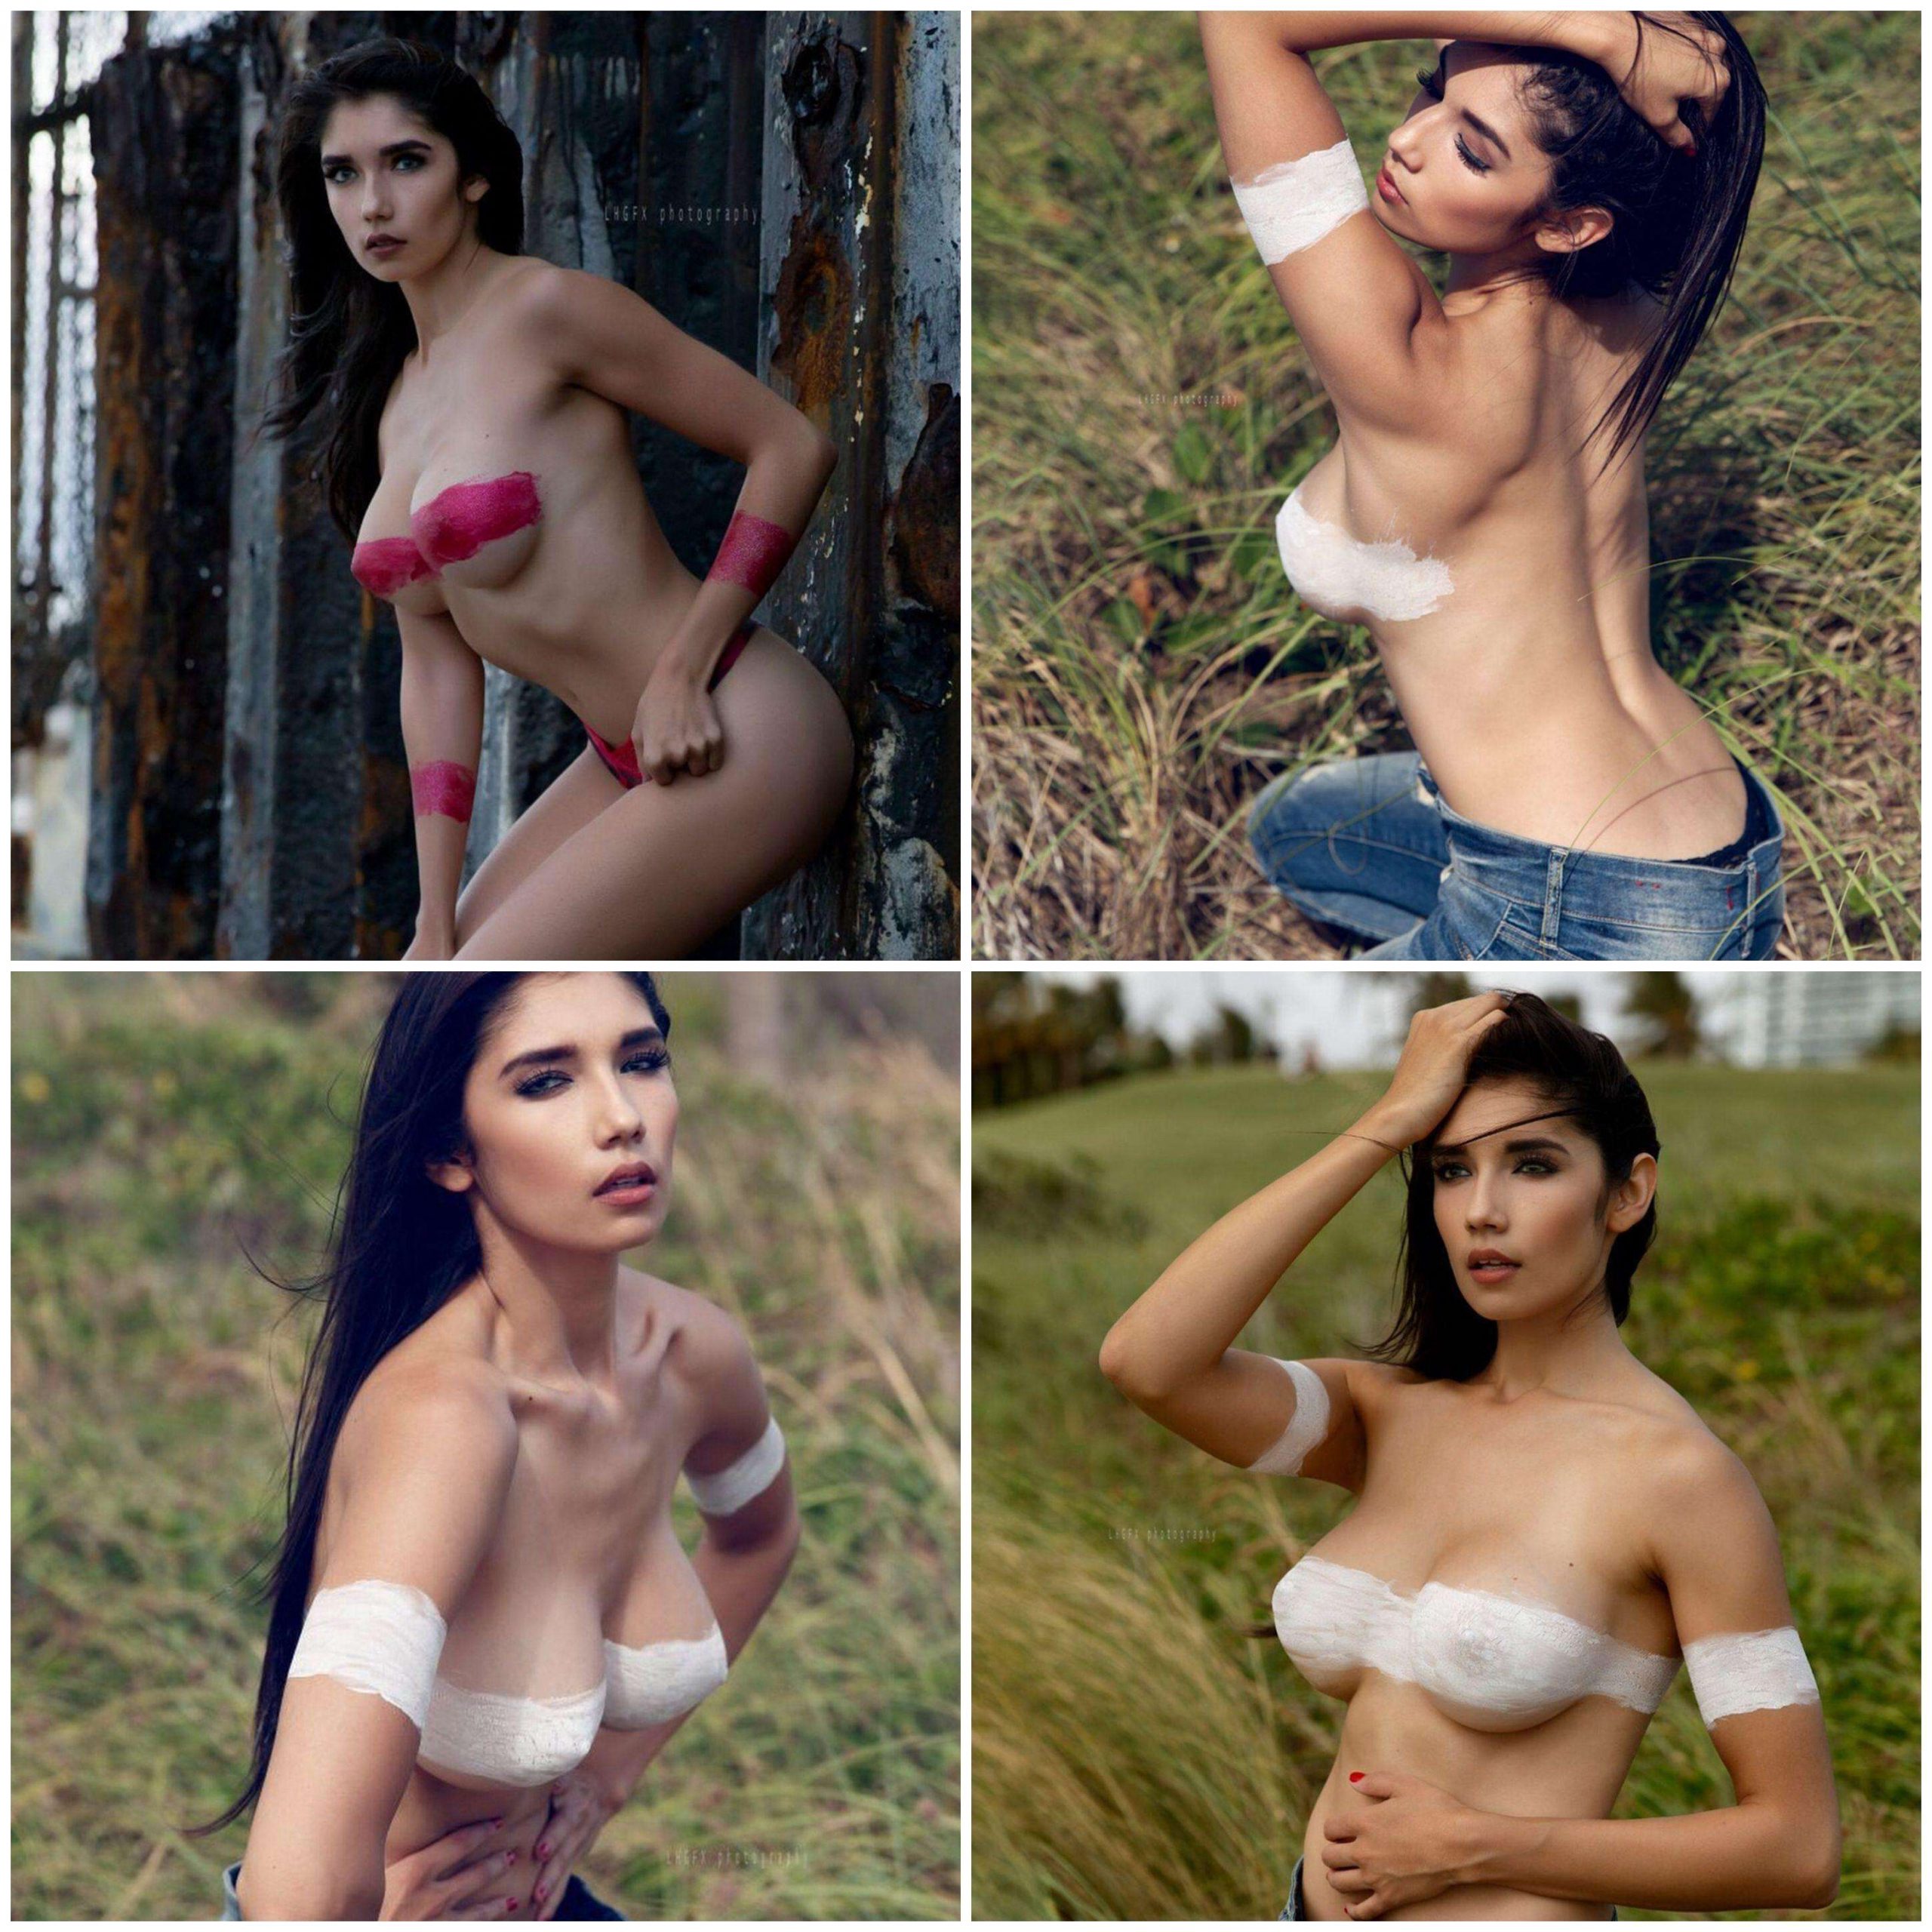 Diana vazquez topless